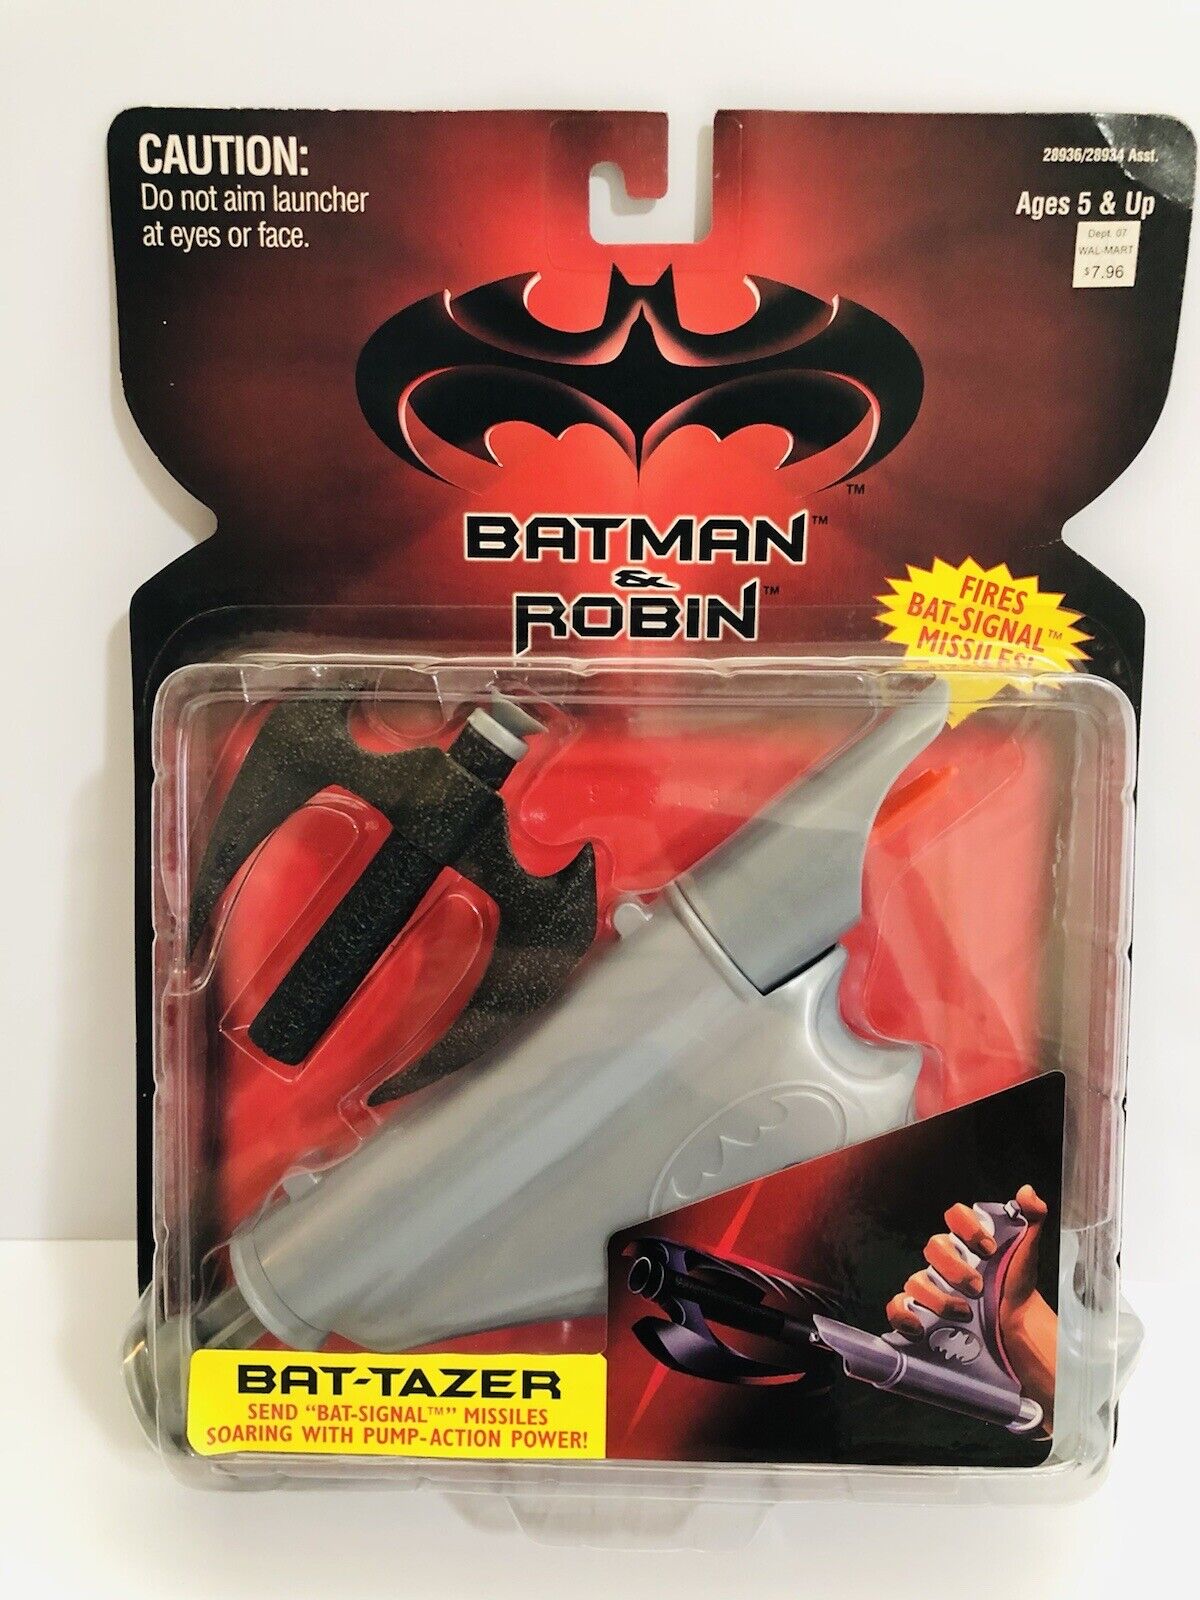 Batman & Robin Bat-Tazer Toy(1997 Kenner) Brand New! 76281289366 | eBay